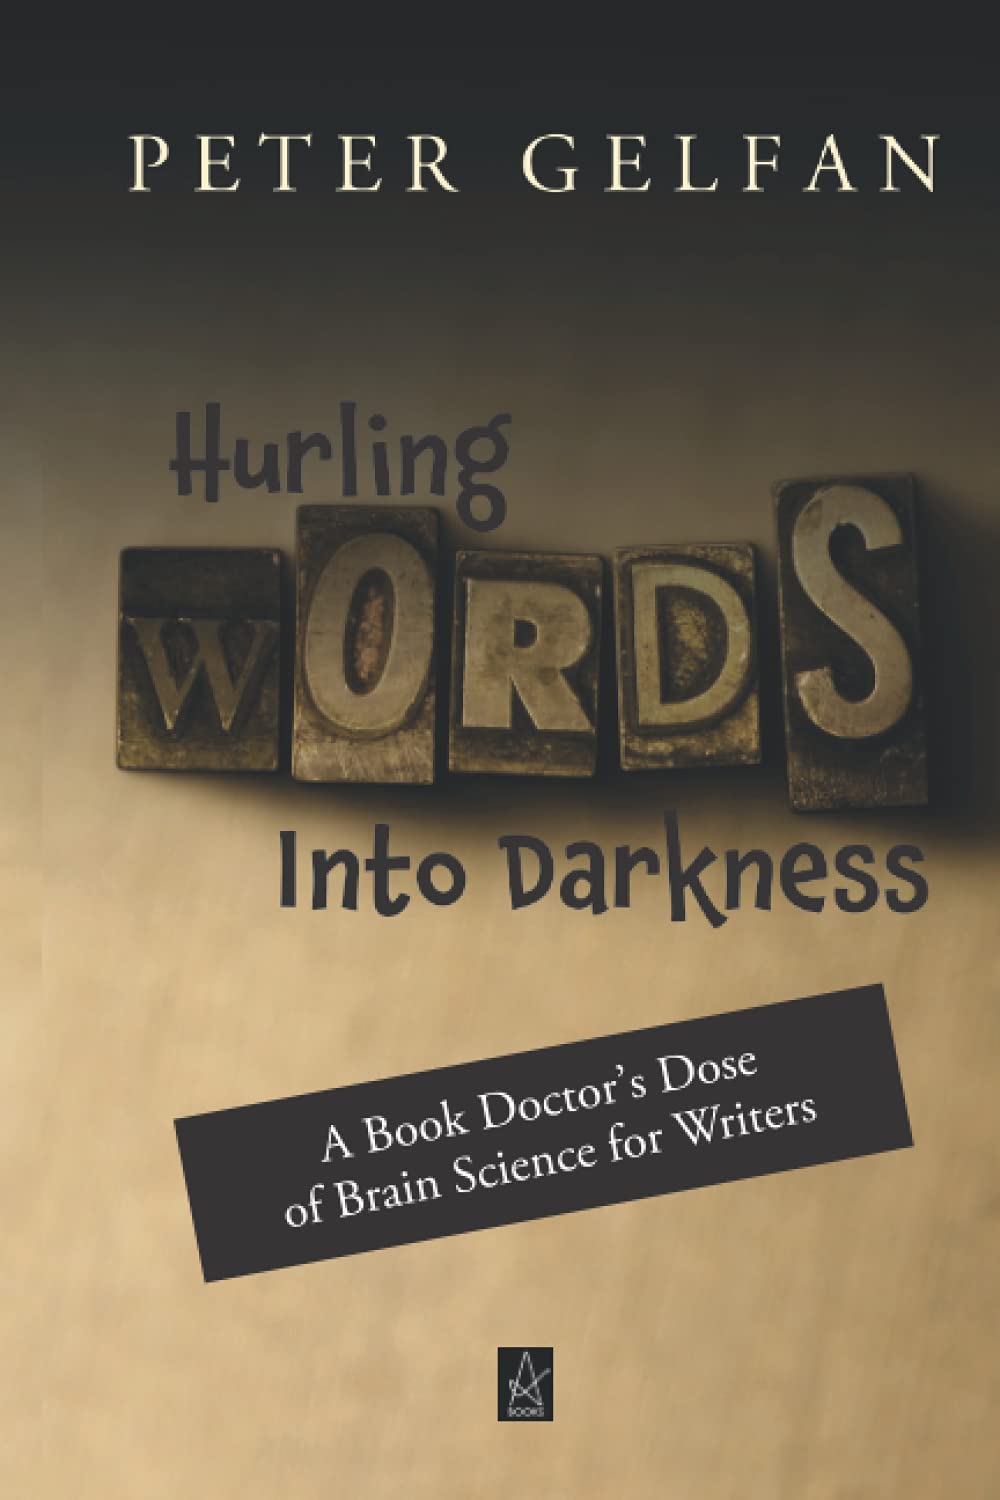 Hurling Words into Darkness